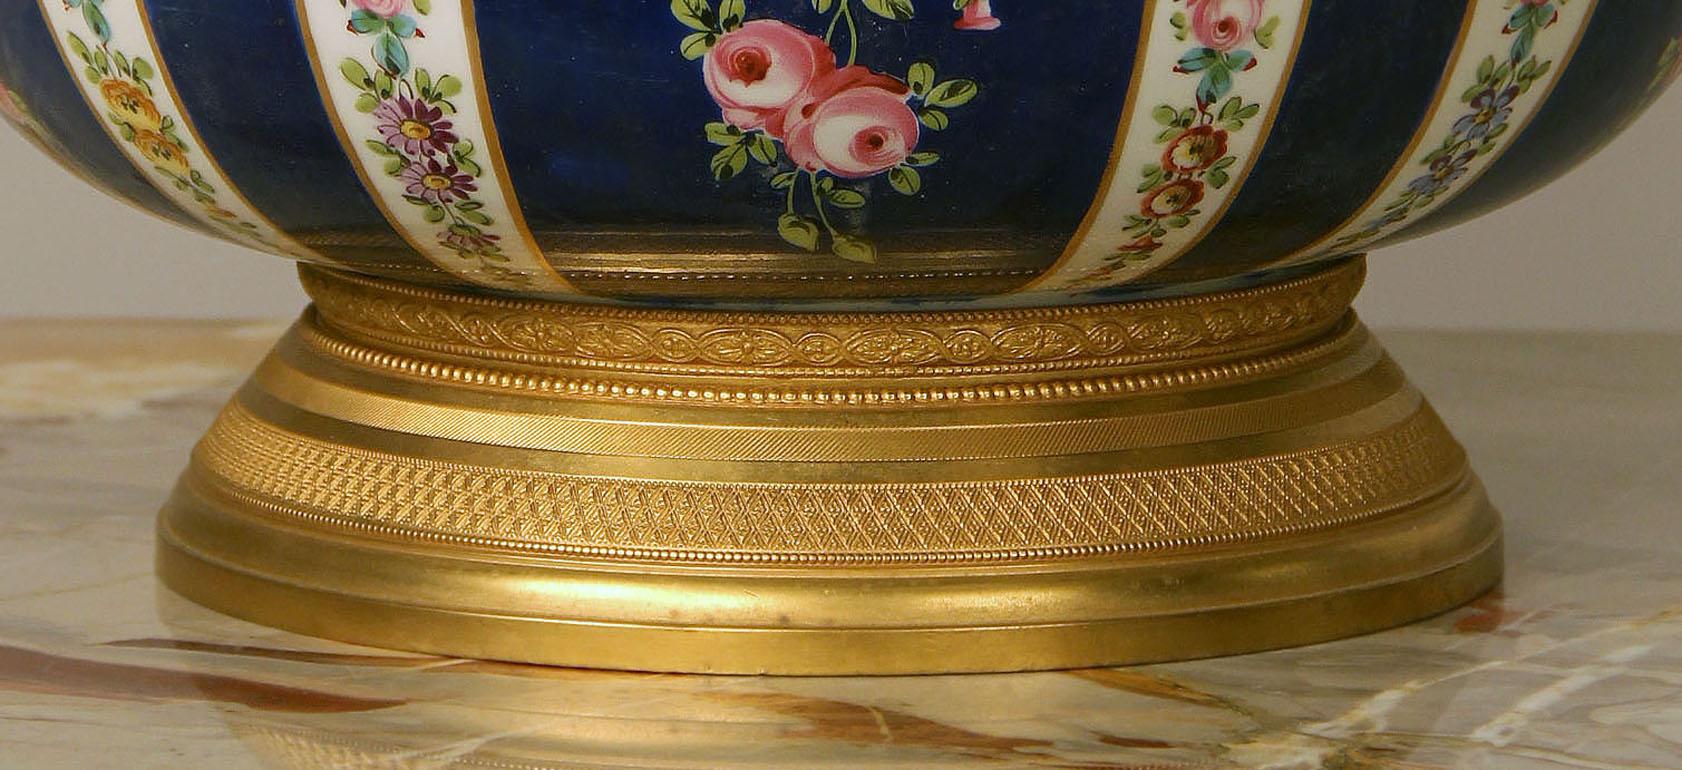 French Fine Late 19th Century Gilt Bronze-Mounted Sèvres Style Porcelain Jardinière